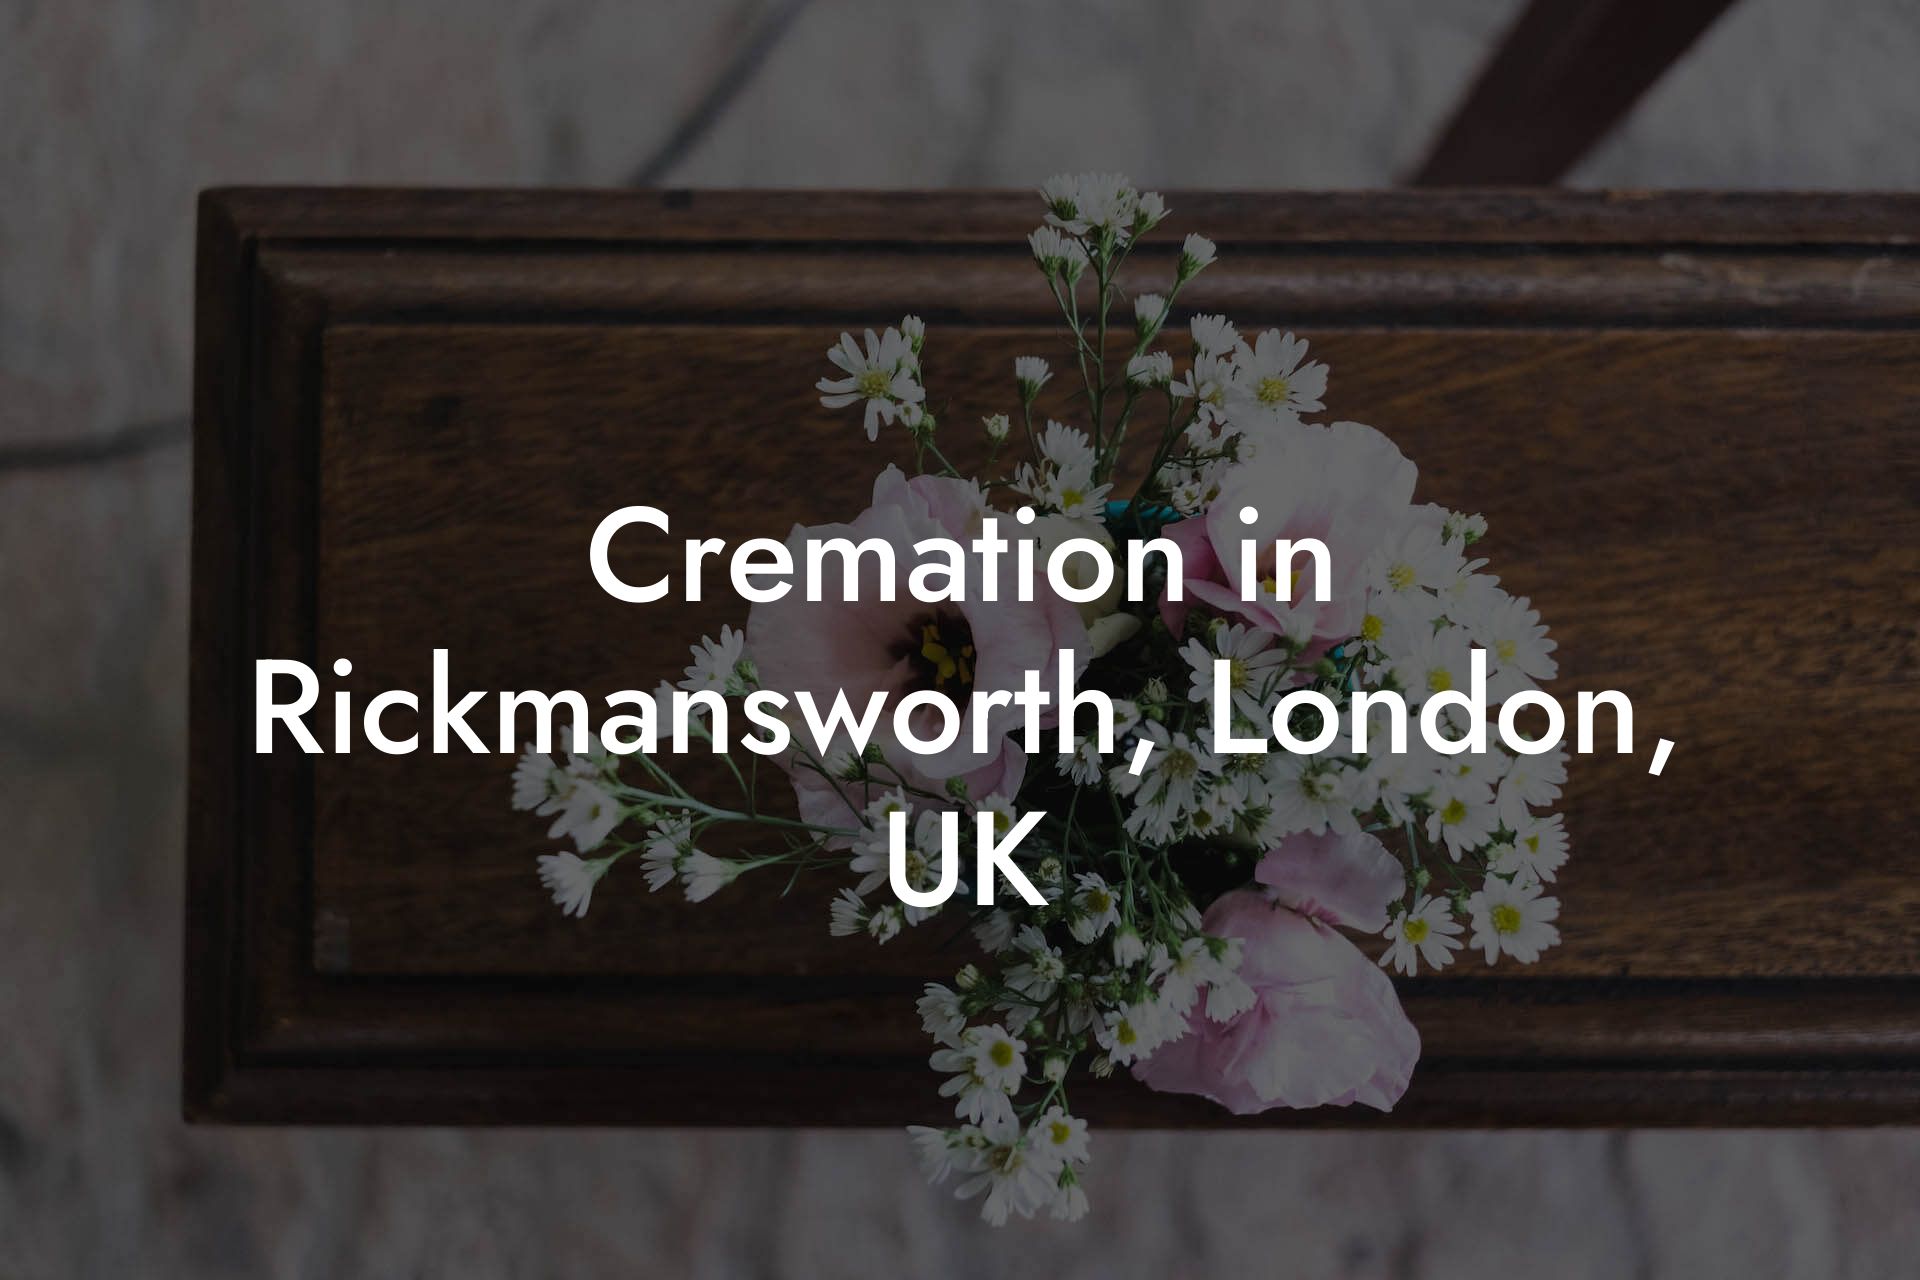 Cremation in Rickmansworth, London, UK